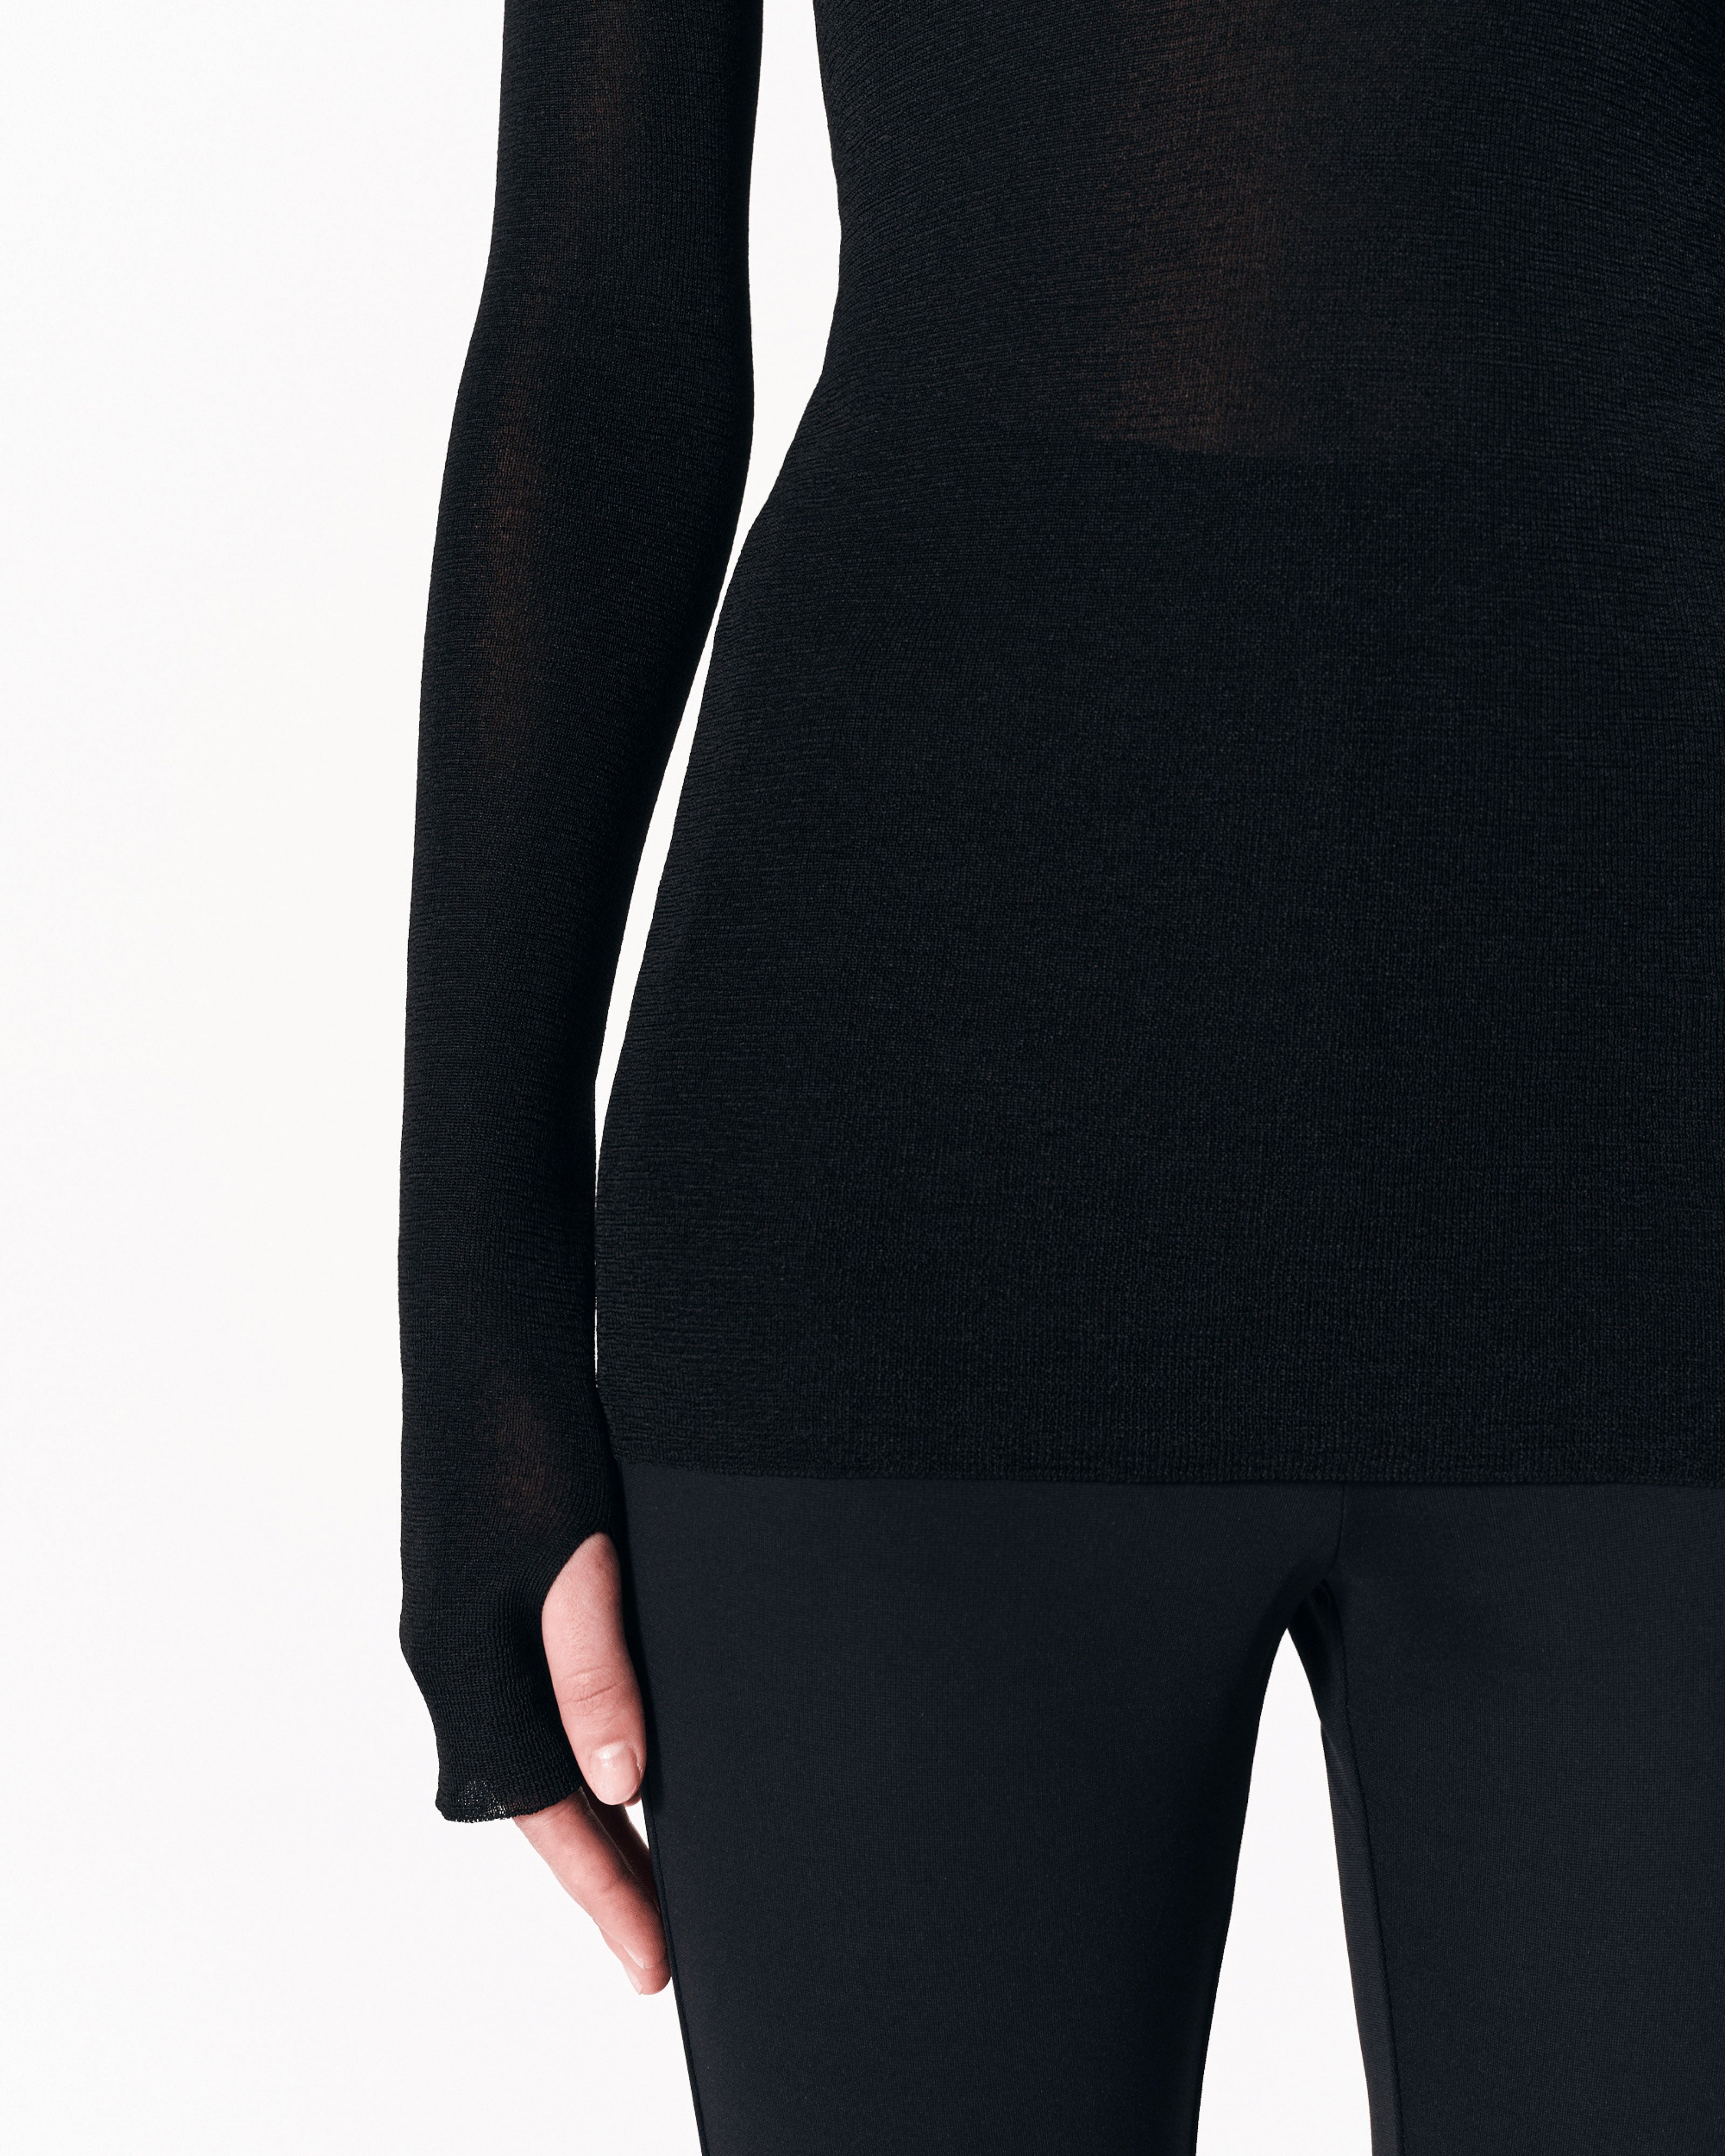     sener-besim-the-thumbhole-turtleneck-black-knitwear-made-in-italy